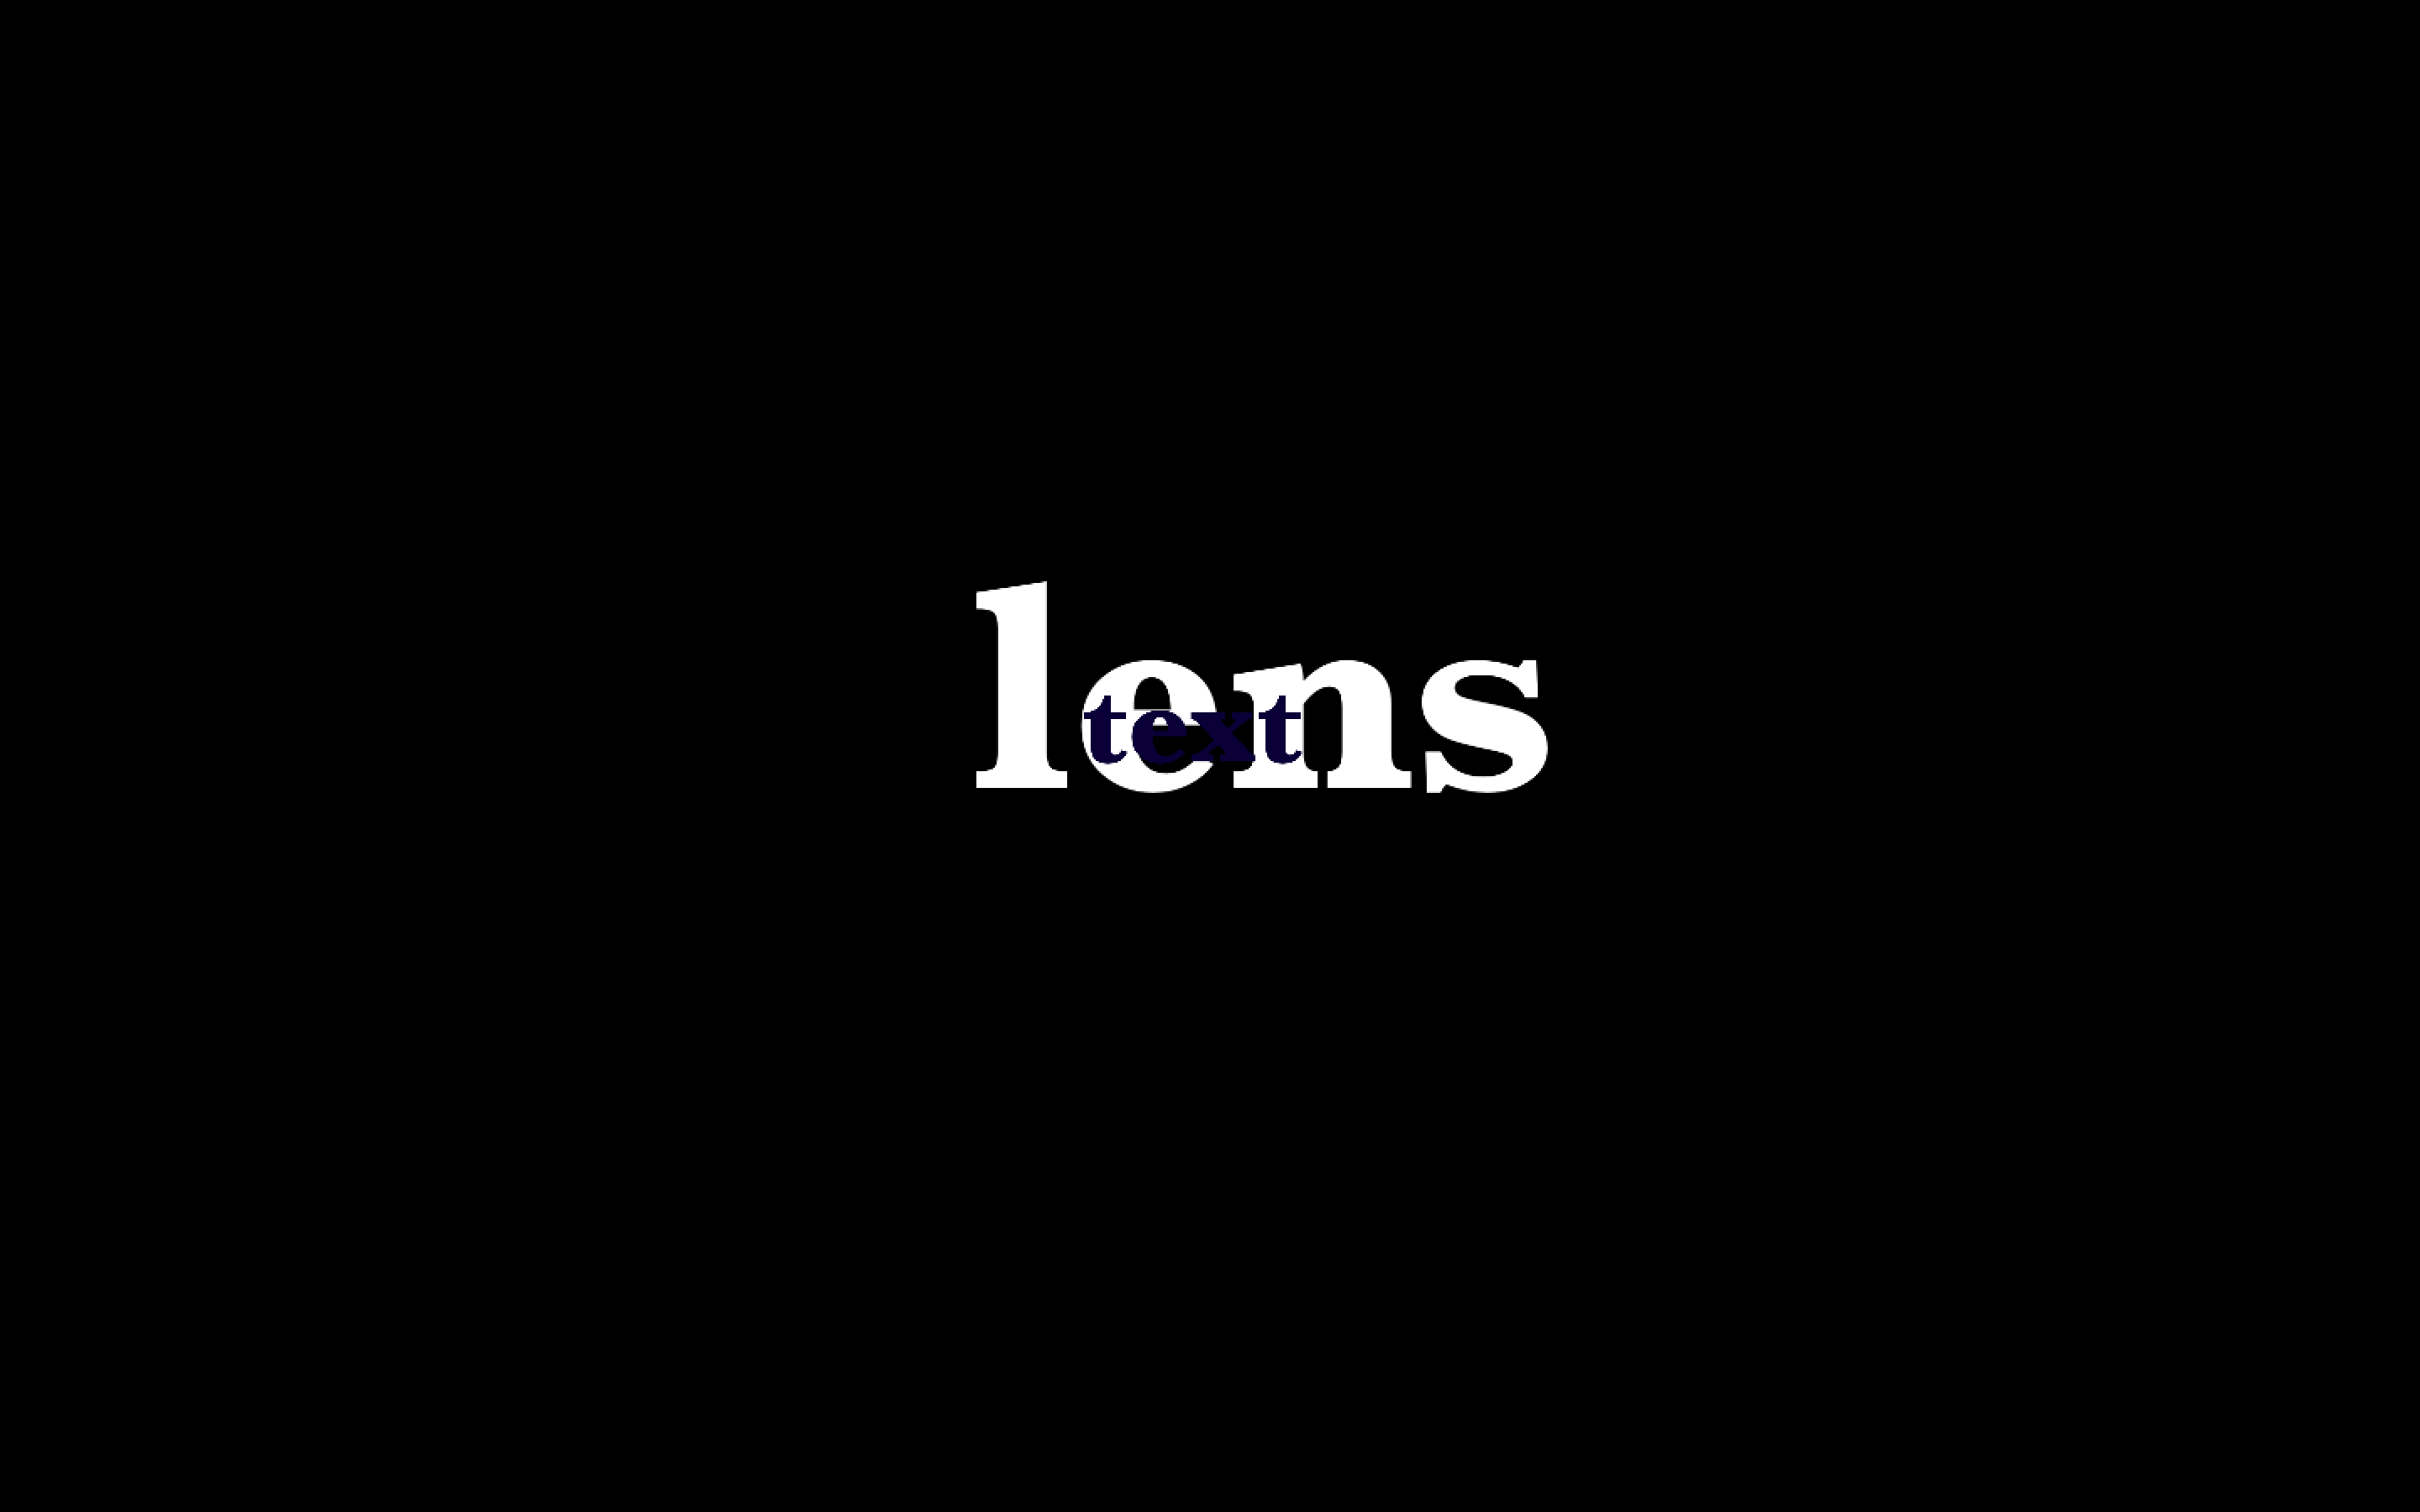 lens0.png